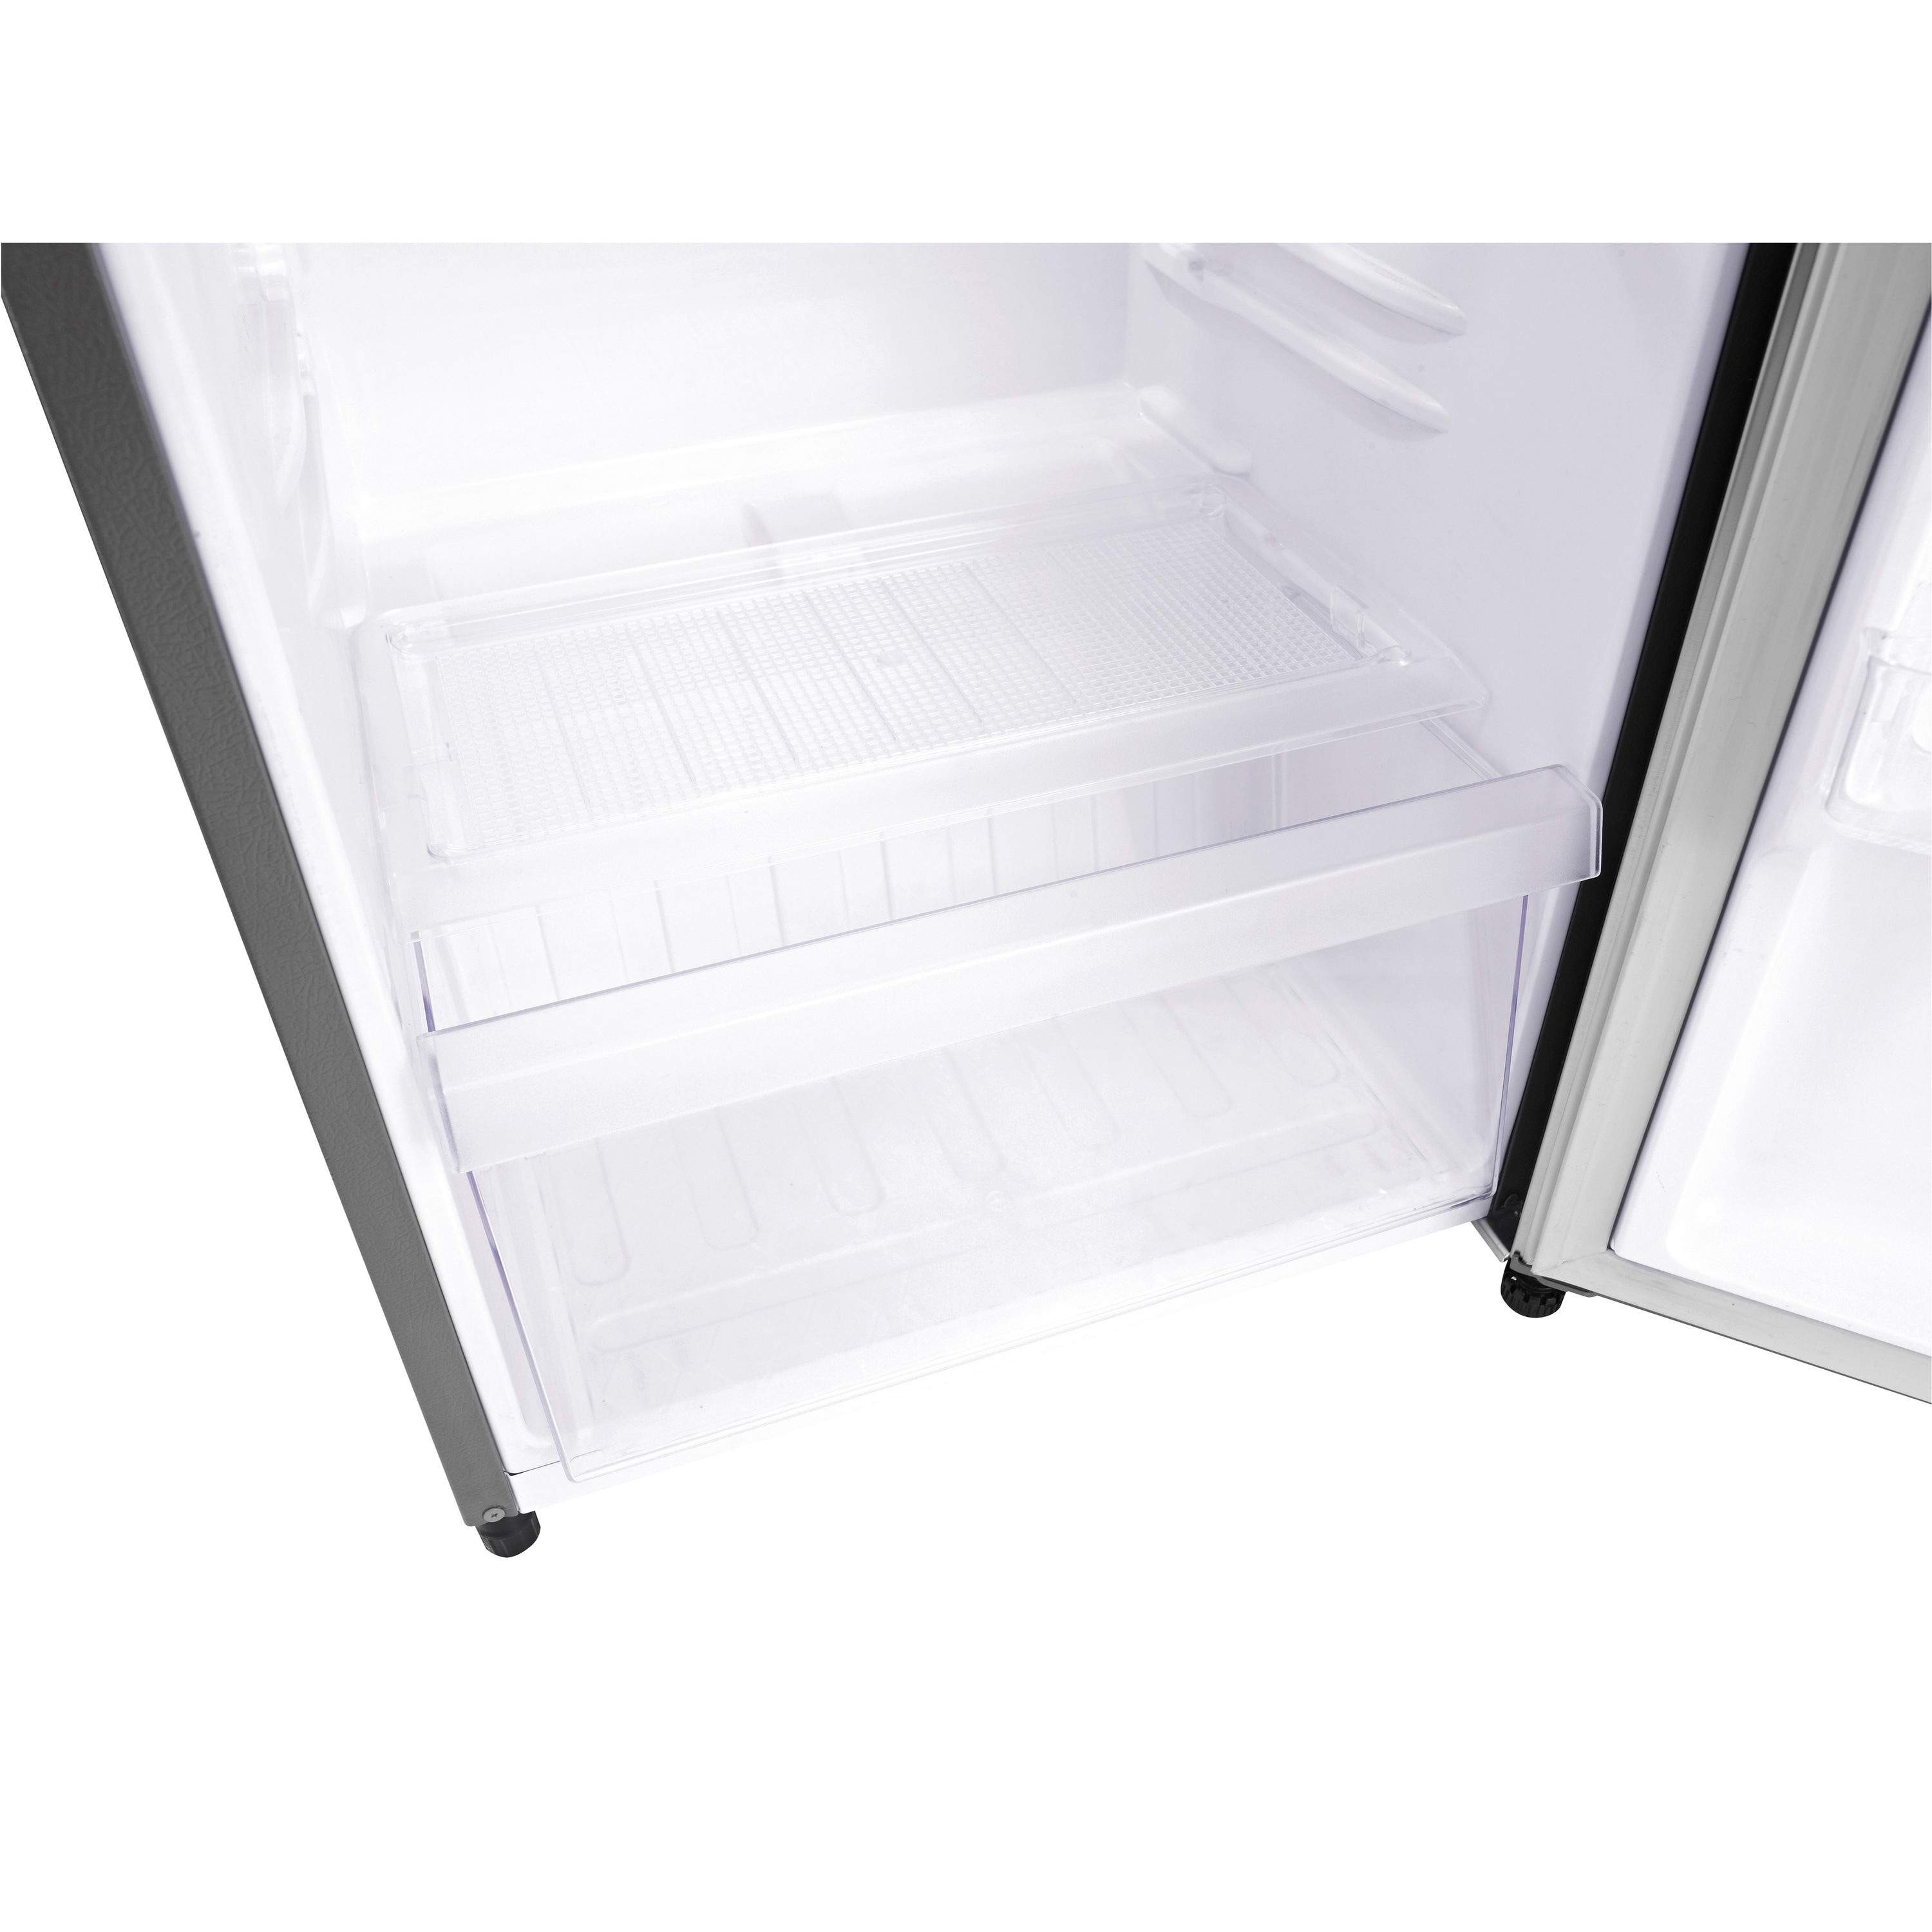 LG 6.9-cu ft Counter-depth Top-Freezer Refrigerator (Platinum